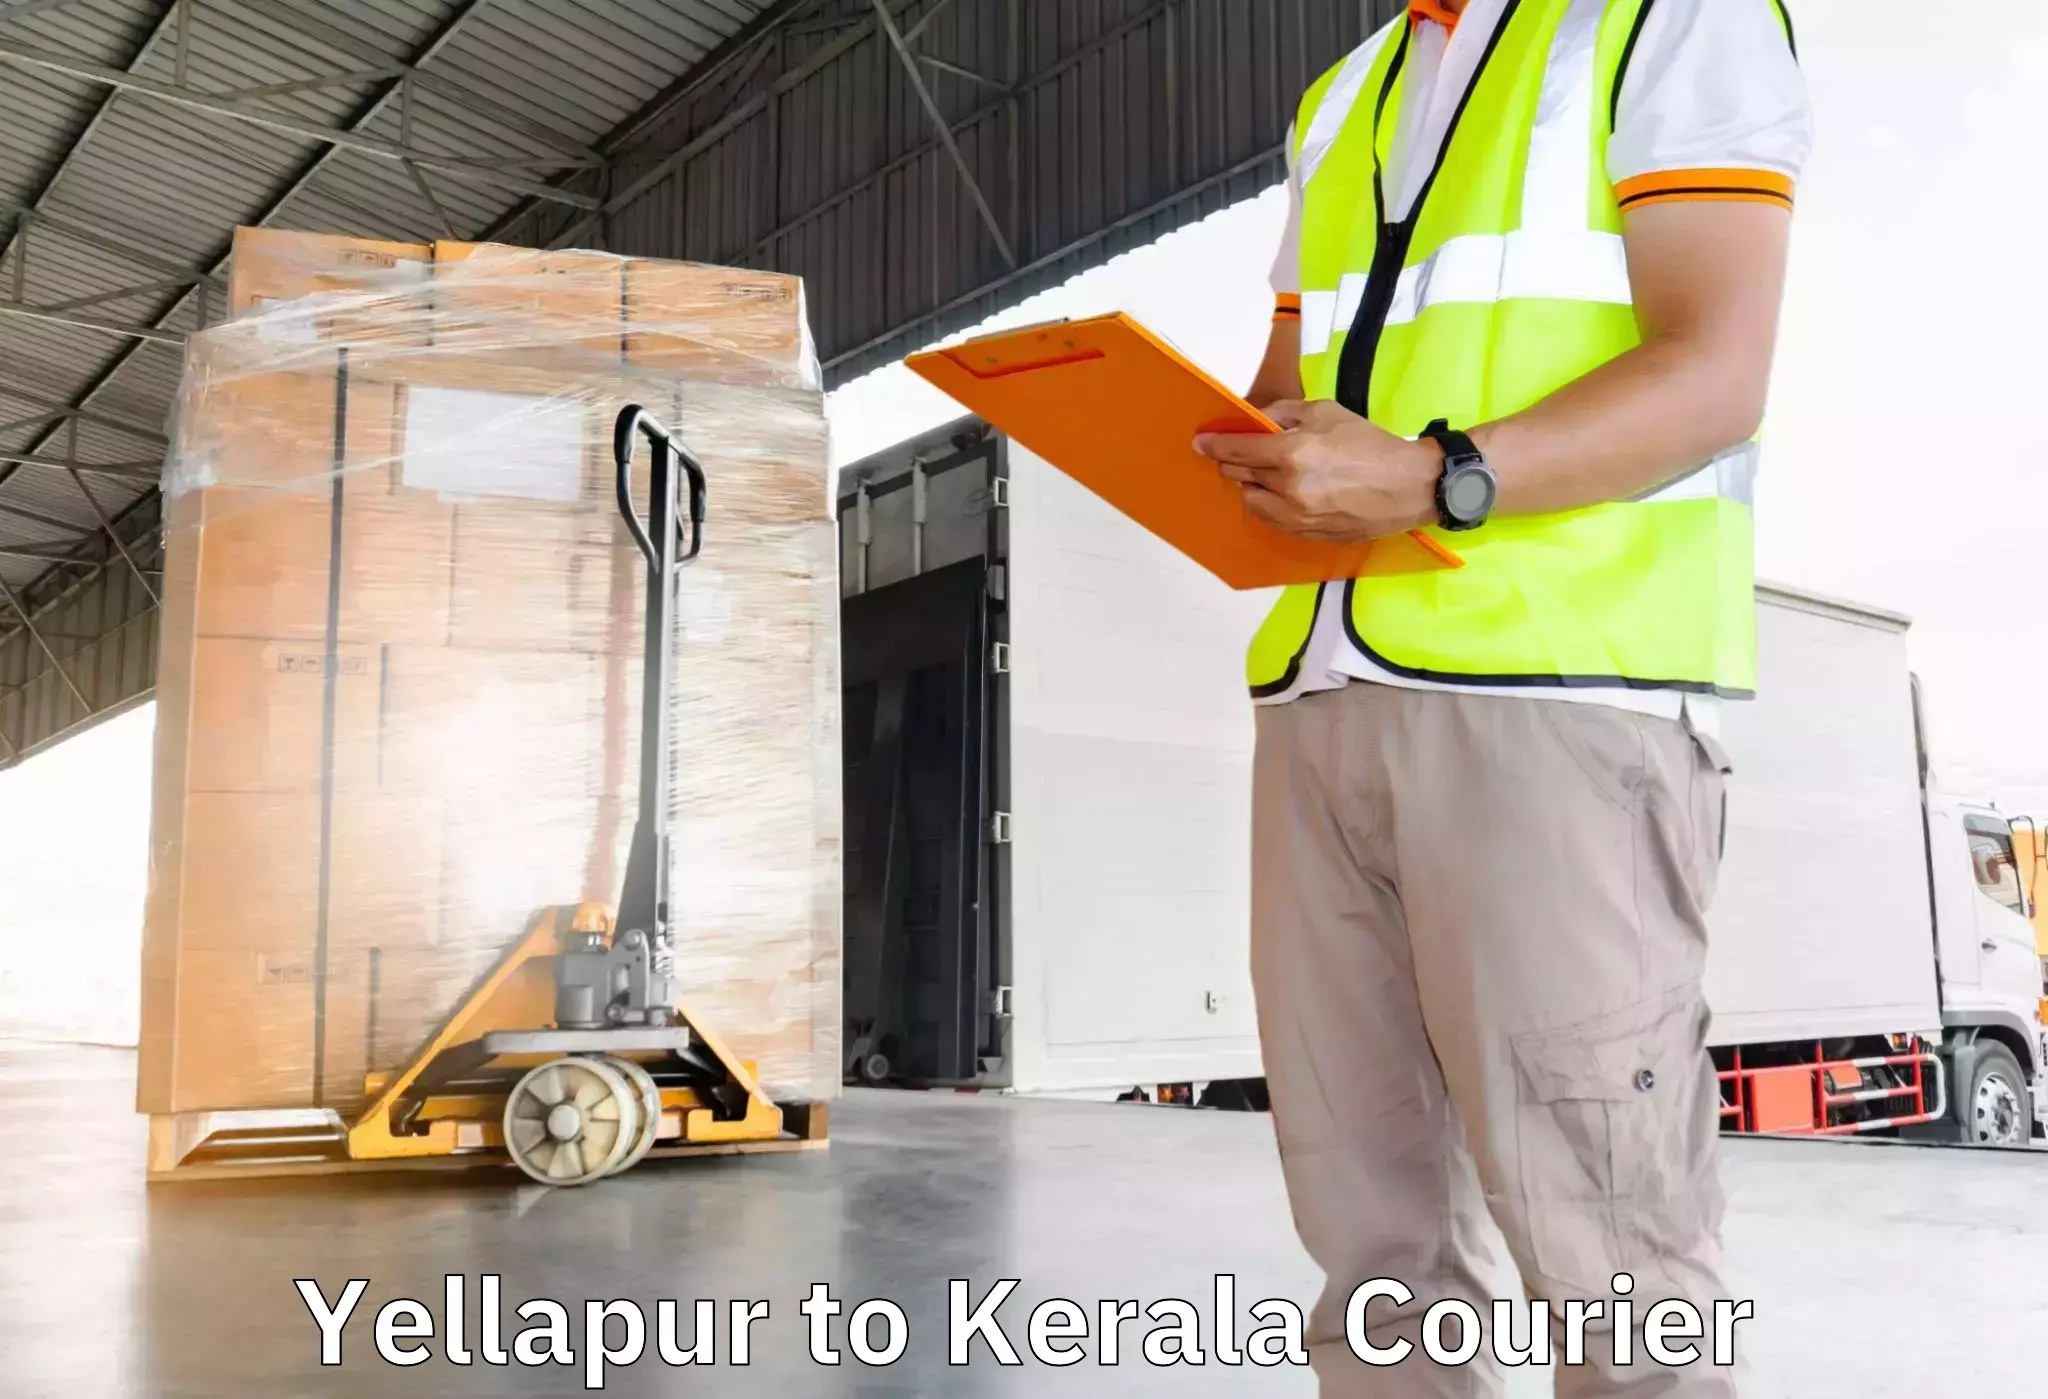 Trusted moving company Yellapur to Kochi